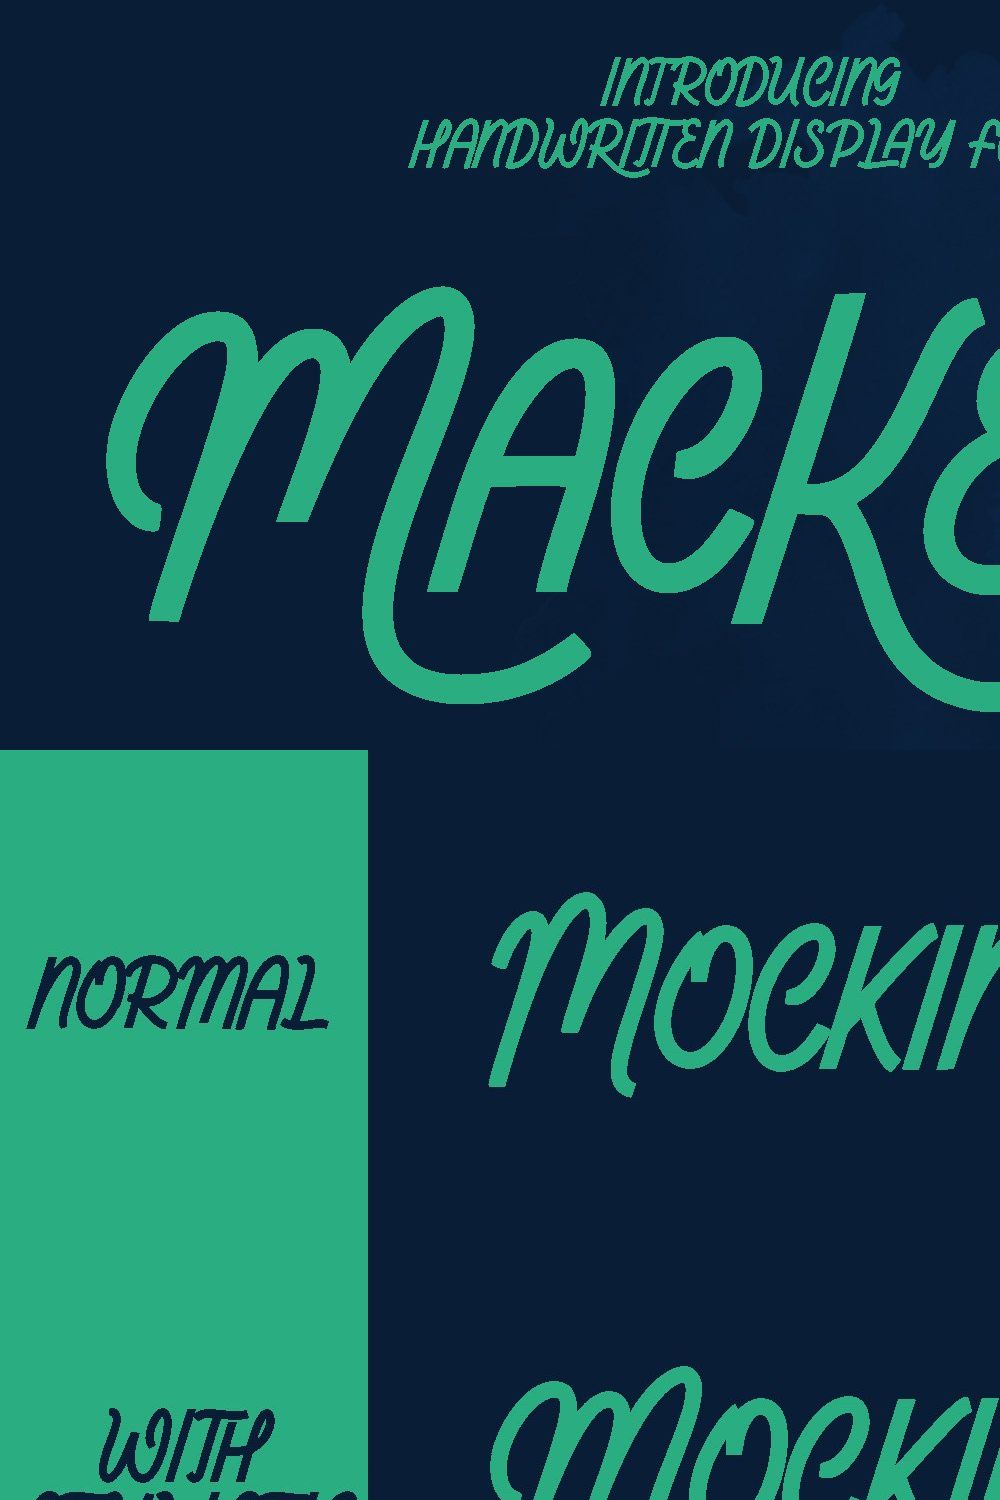 Mackers Handwritten Display Font pinterest preview image.